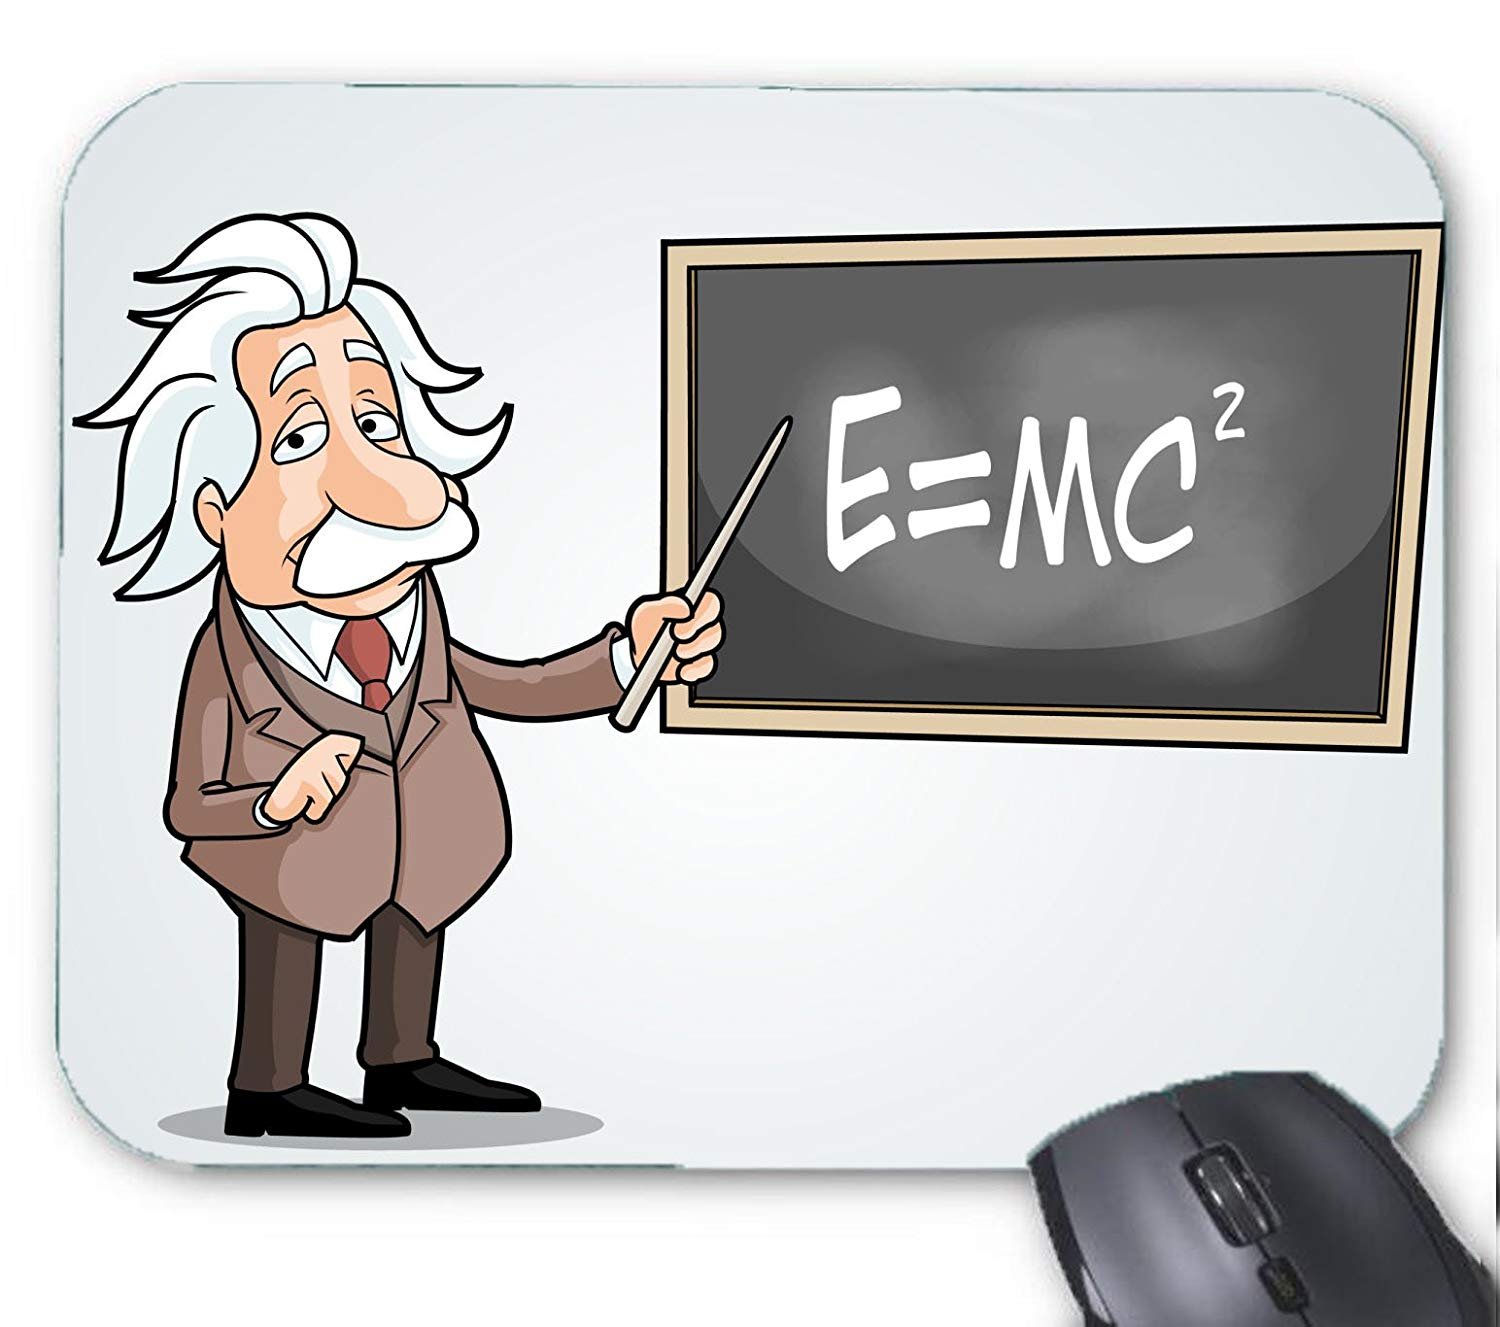 Альберт Эйнштейн мультящий